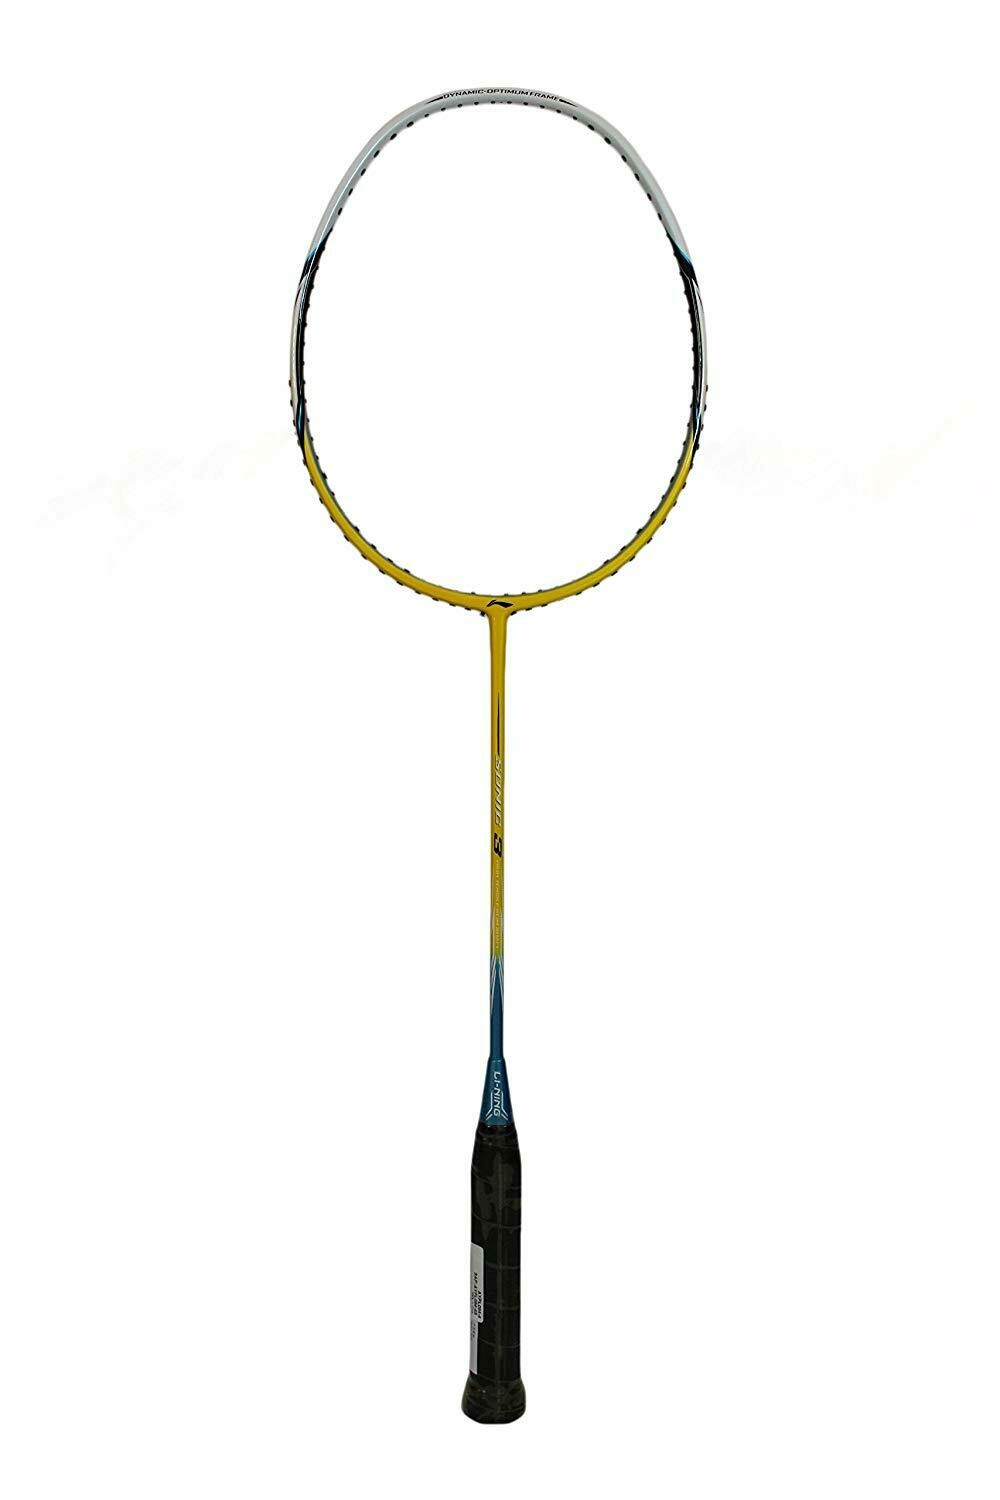 LI-NING Sonic 3 Badminton Racquet